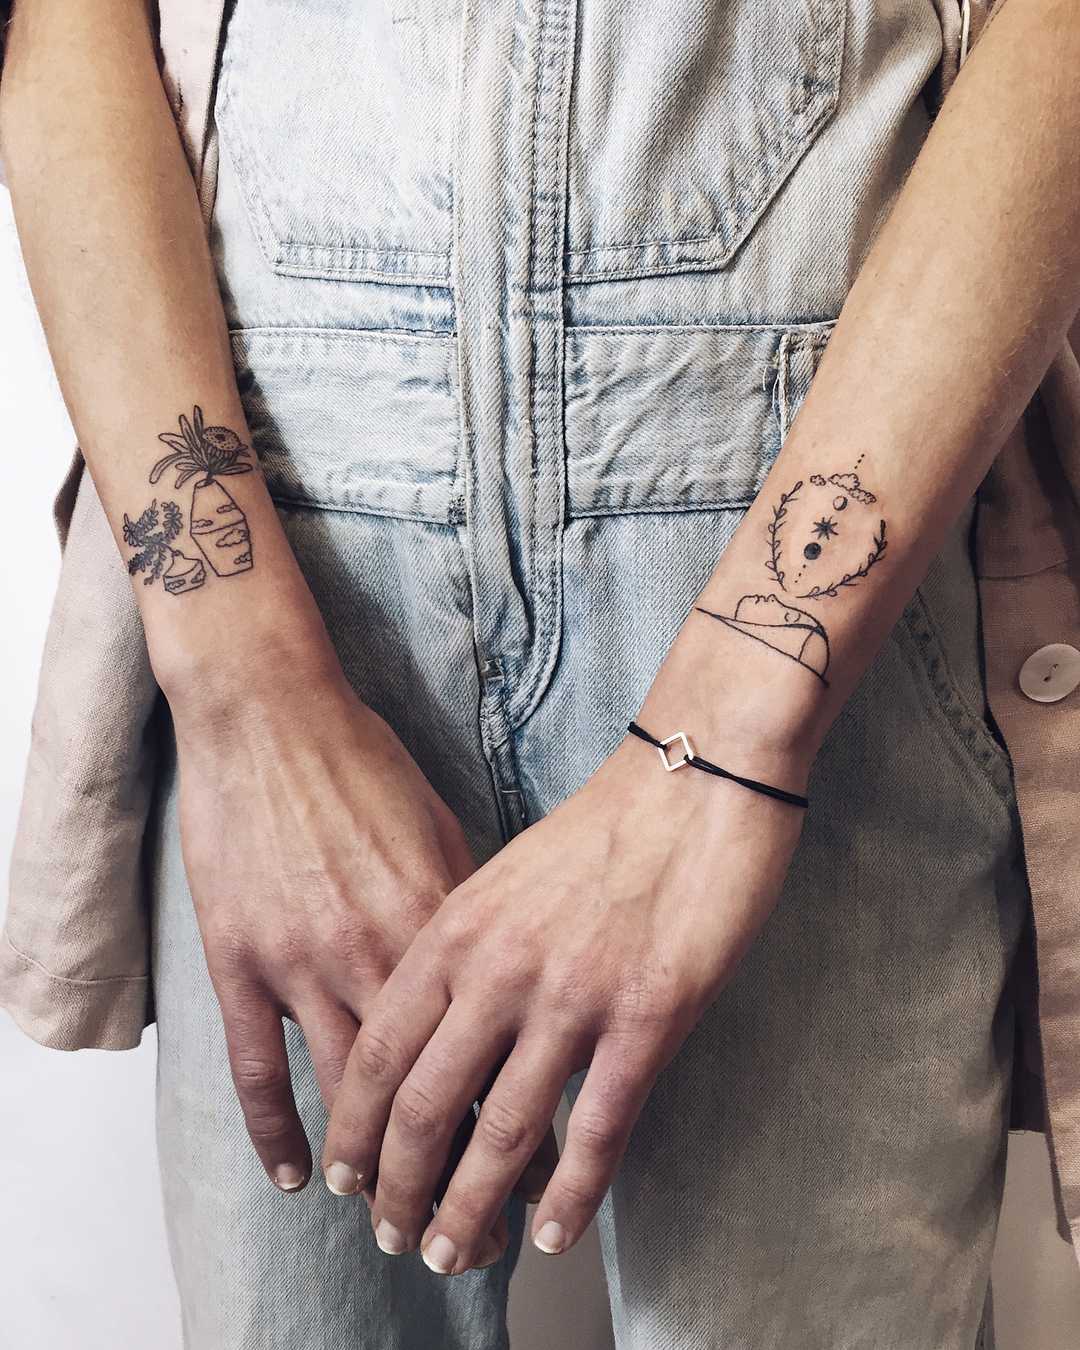 Little wrist shield tattoos